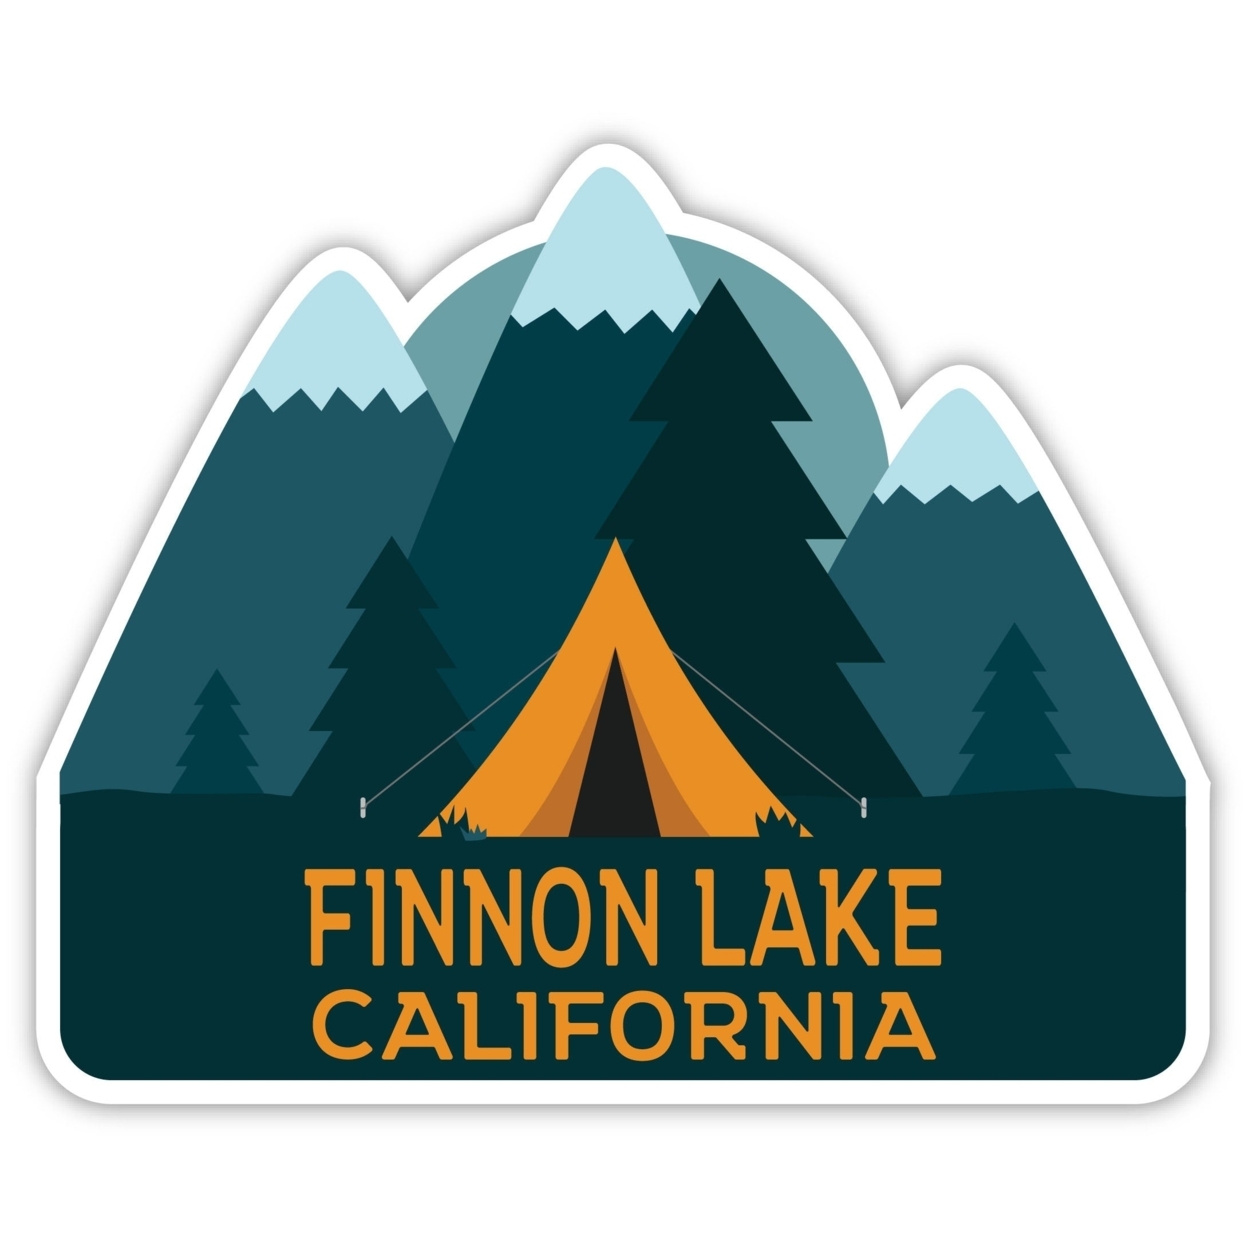 Finnon Lake California Souvenir Decorative Stickers (Choose Theme And Size) - 4-Pack, 10-Inch, Tent